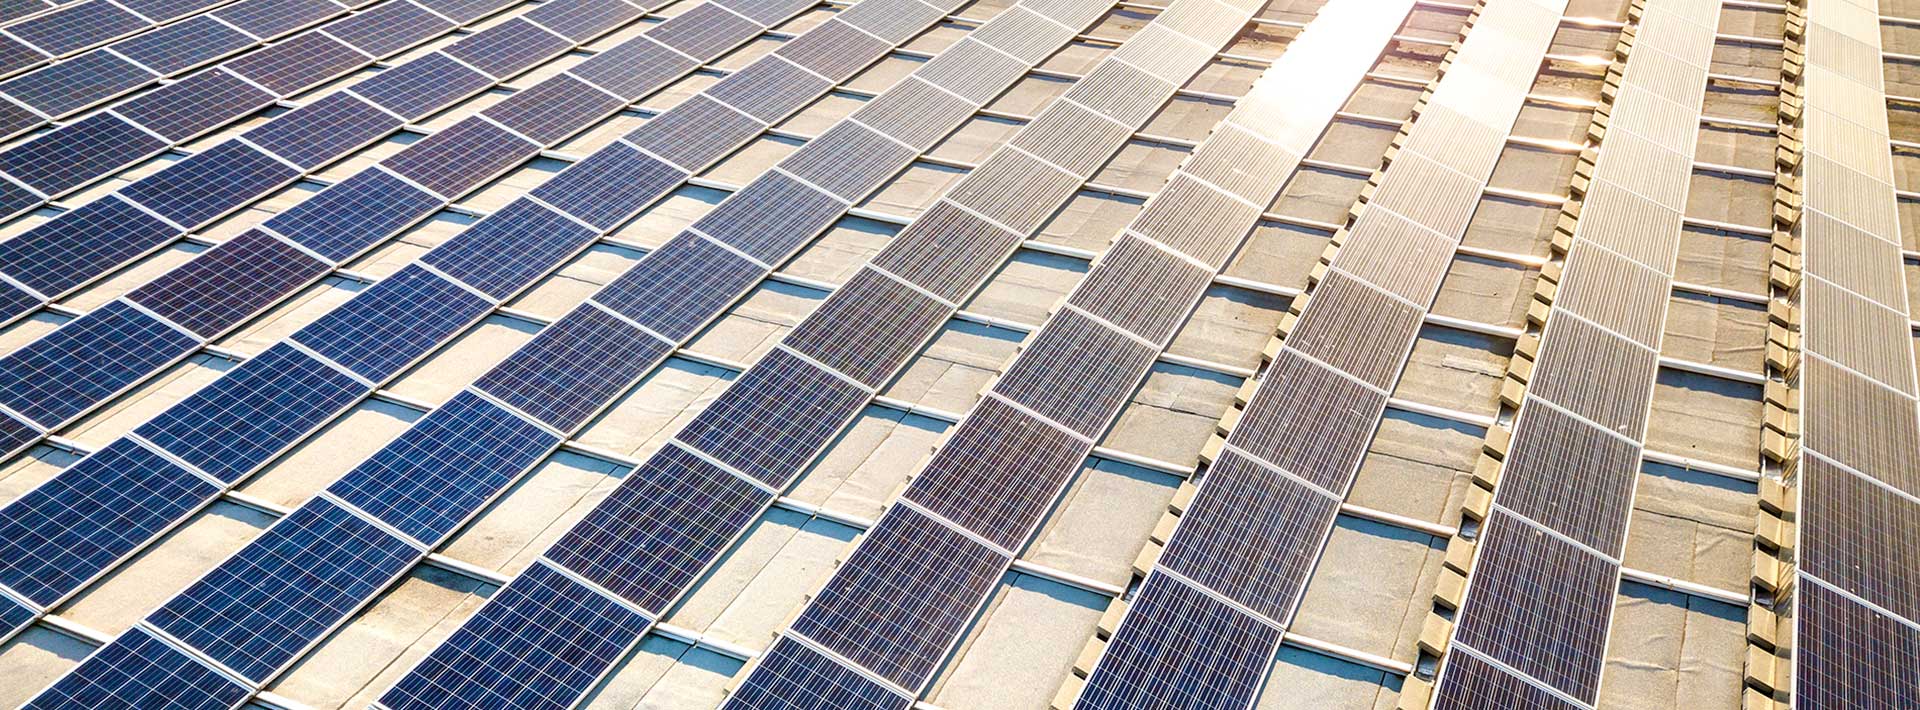 California Solar Rebates Solar Incentives And Tax Credits For 